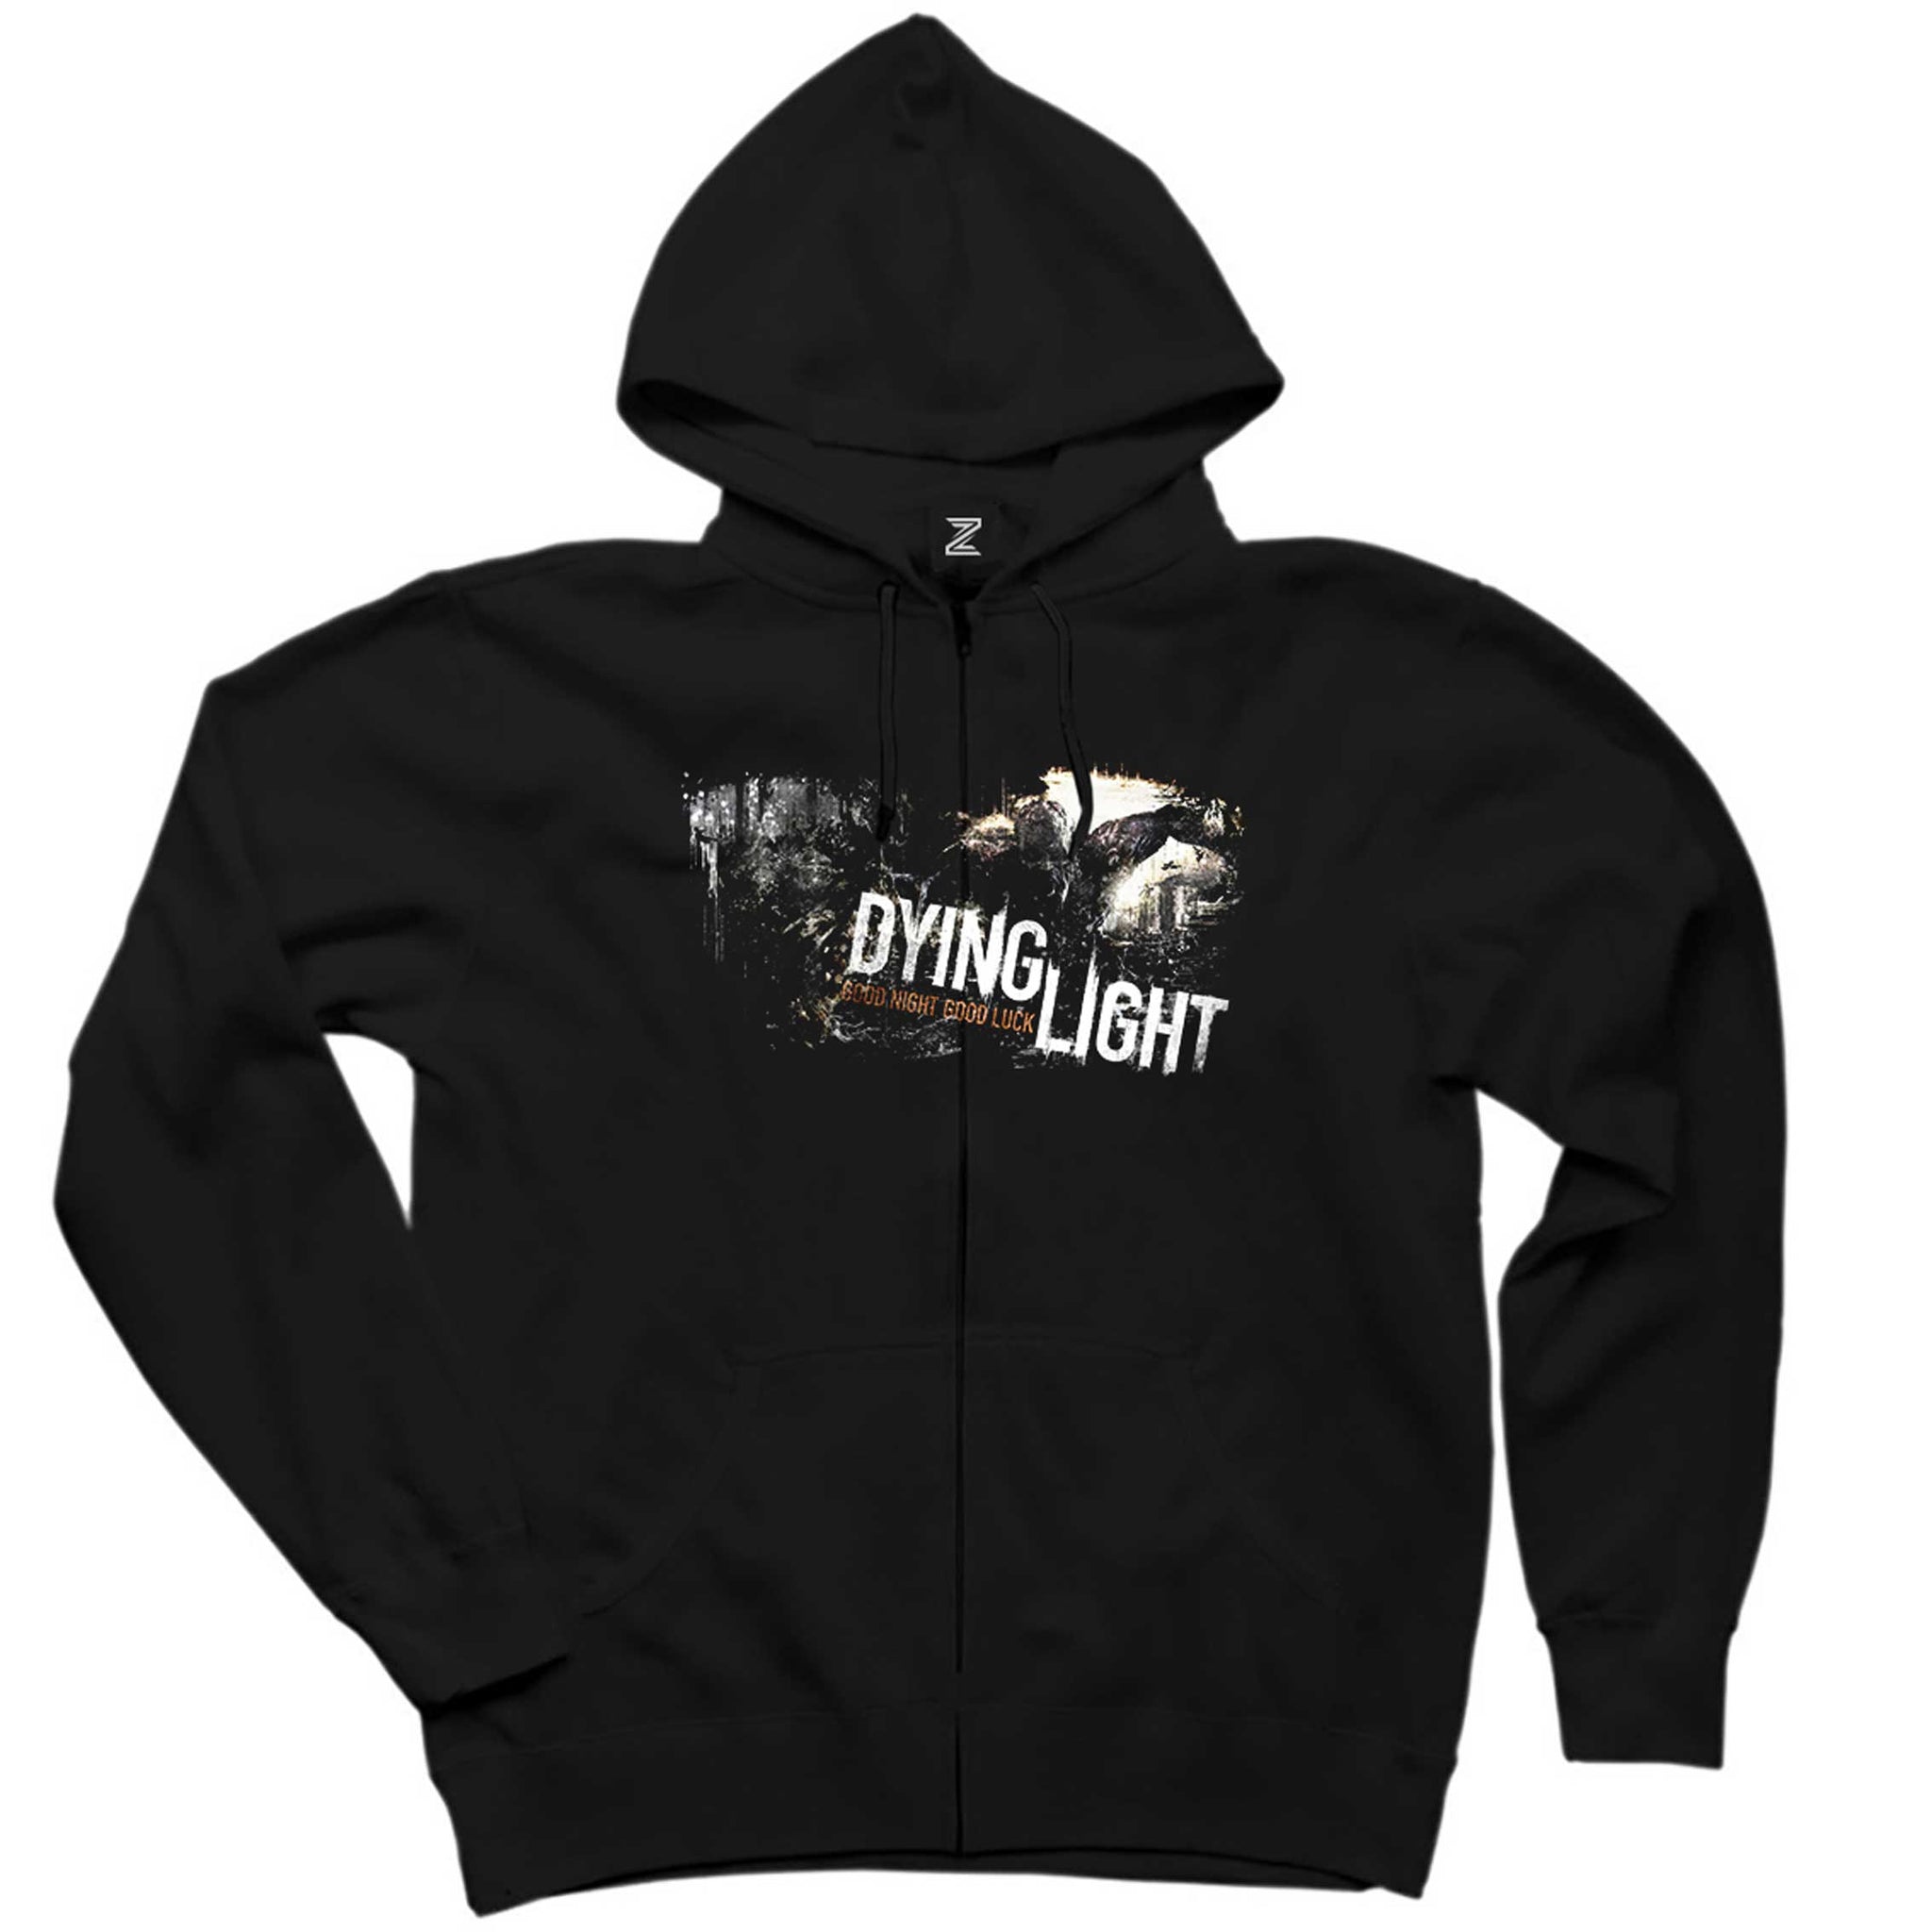 Dying Light 2 Good Night Siyah Fermuarlı Kapşonlu Sweatshirt